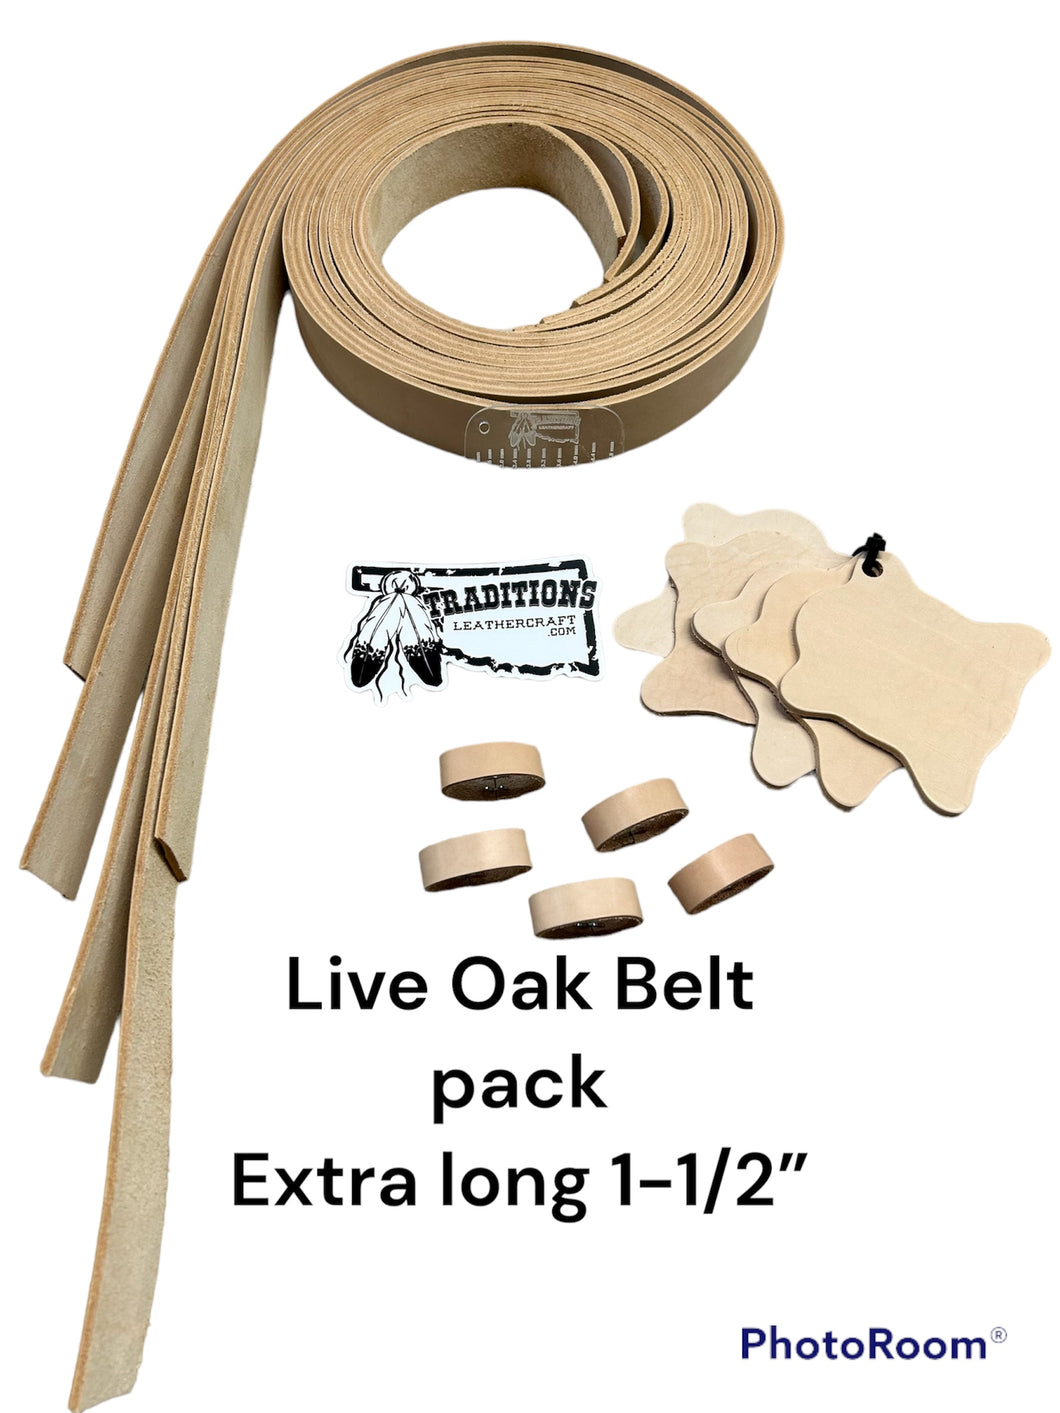 Live Oak belt 5 pk Extra long